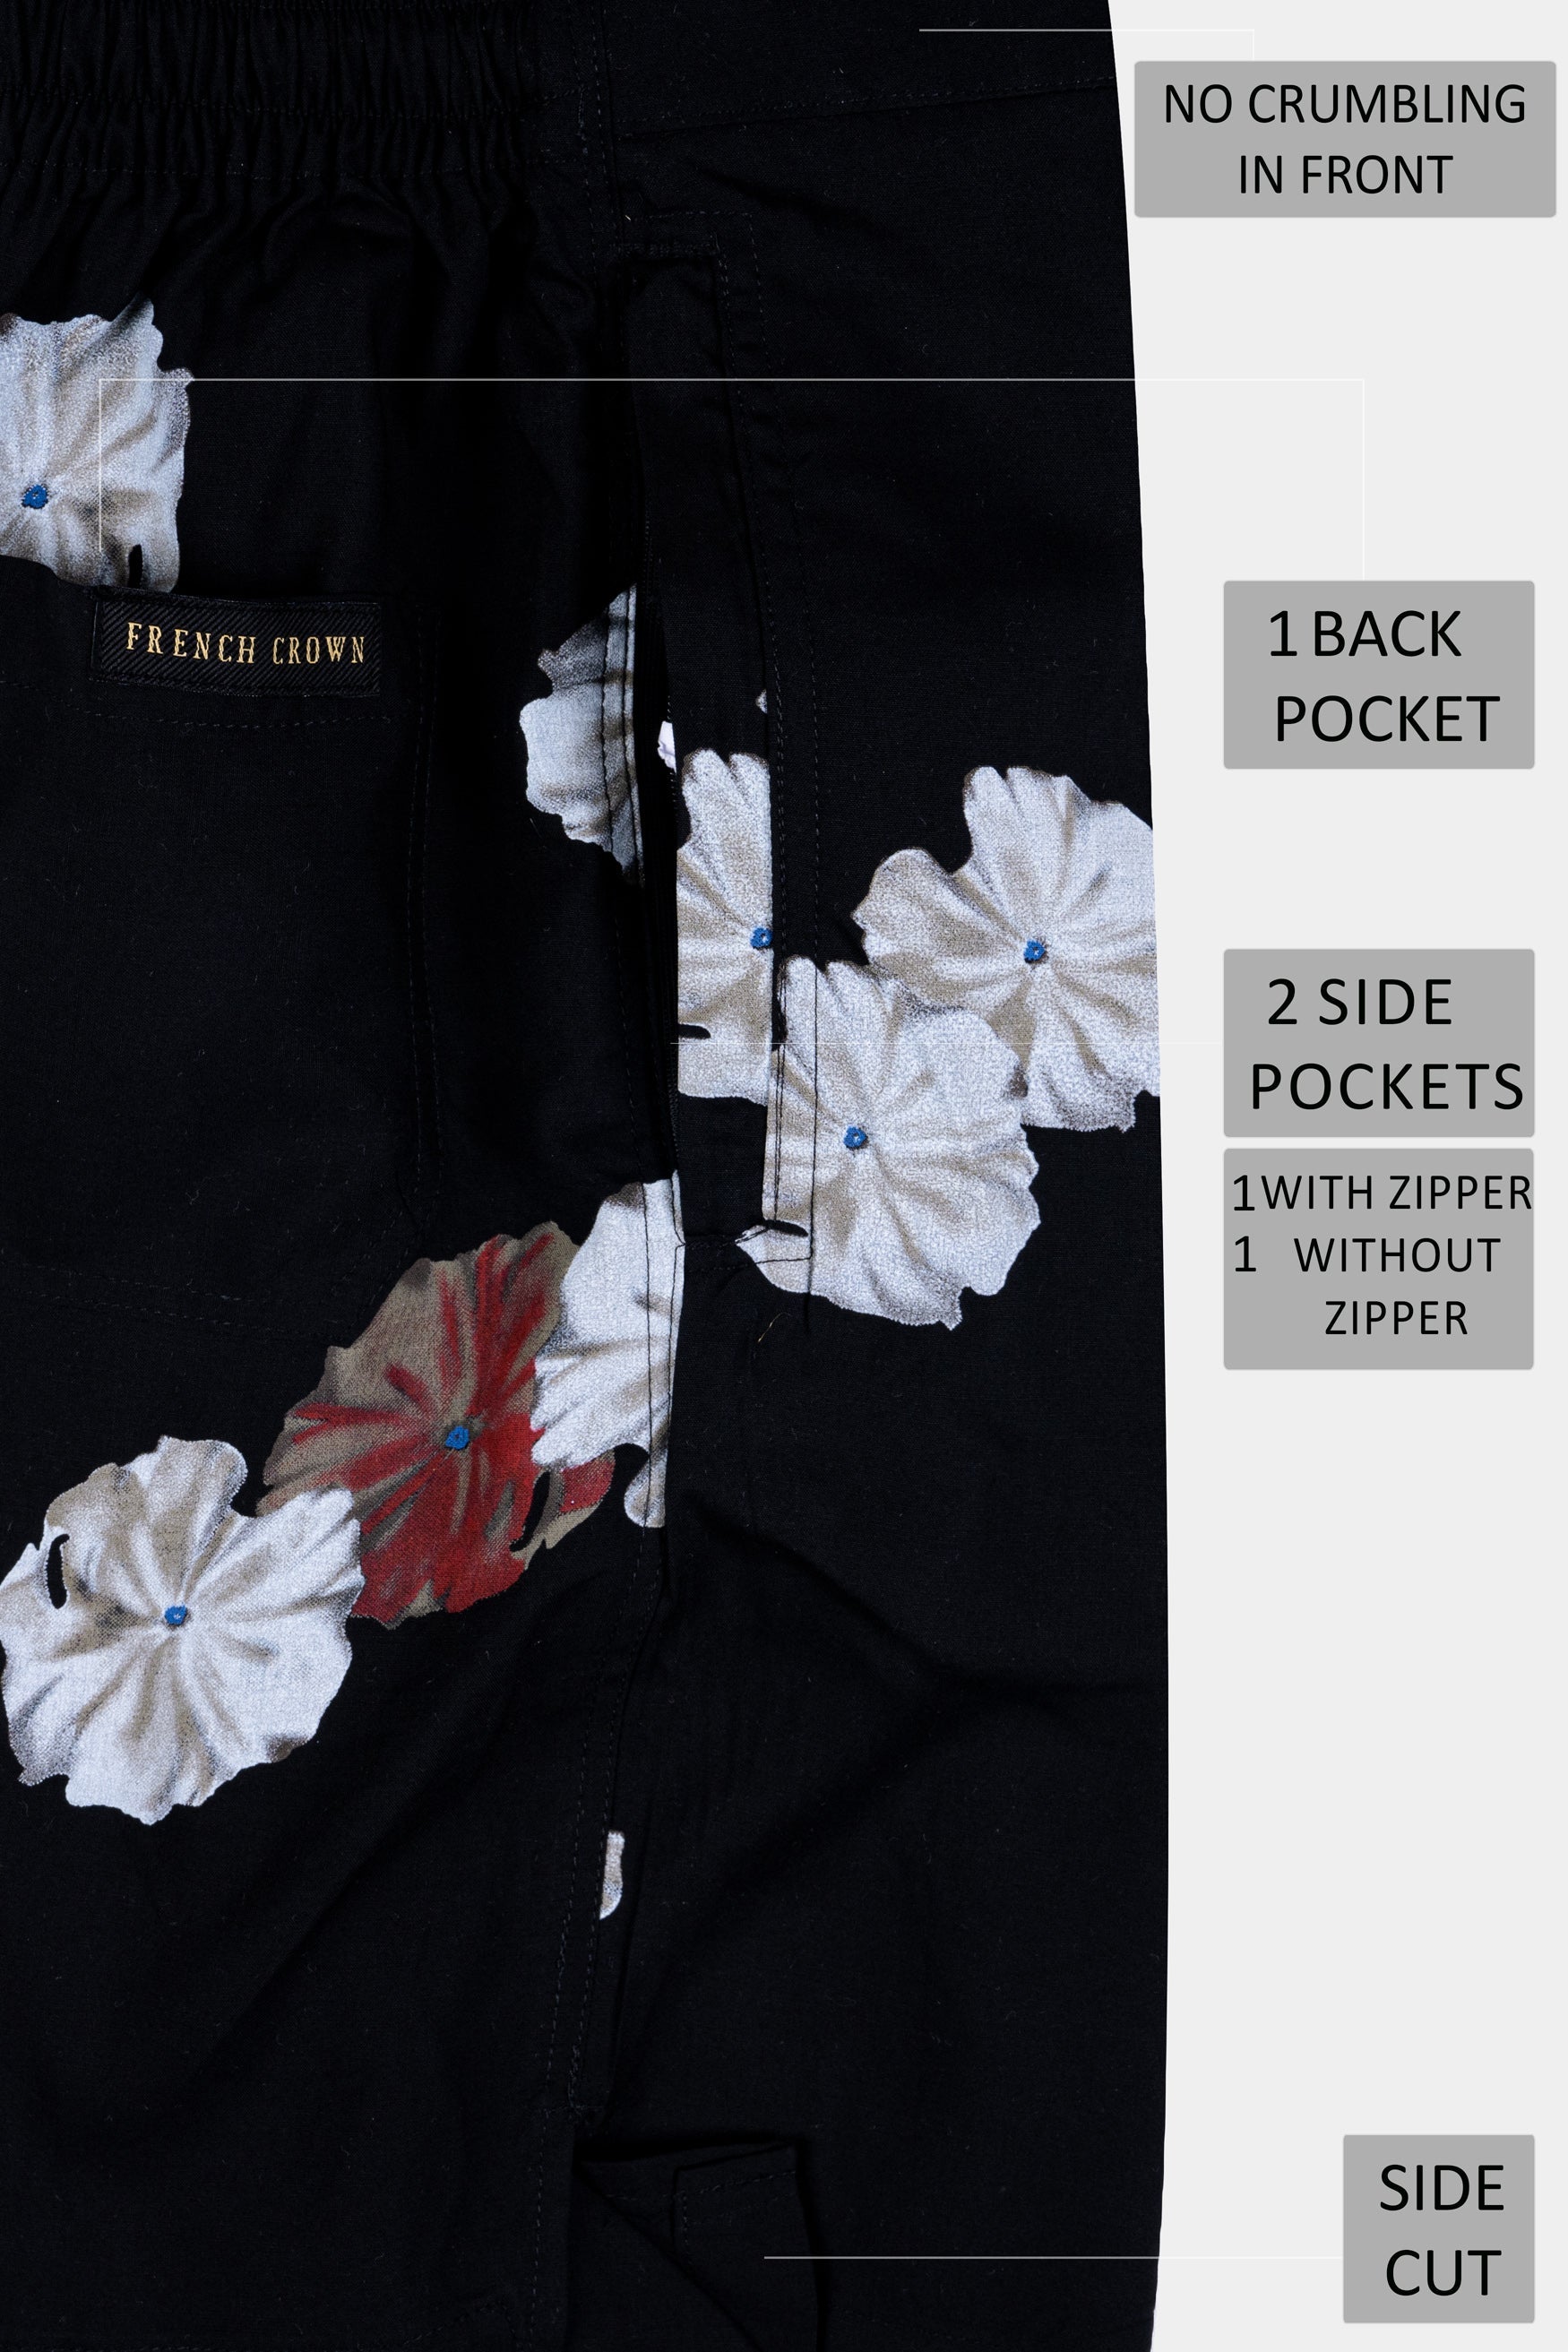 Jade Black and Mystic Gray Floral Printed Premium Tencel Shorts SR401-28, SR401-30, SR401-32, SR401-34, SR401-36, SR401-38, SR401-40, SR401-42, SR401-44